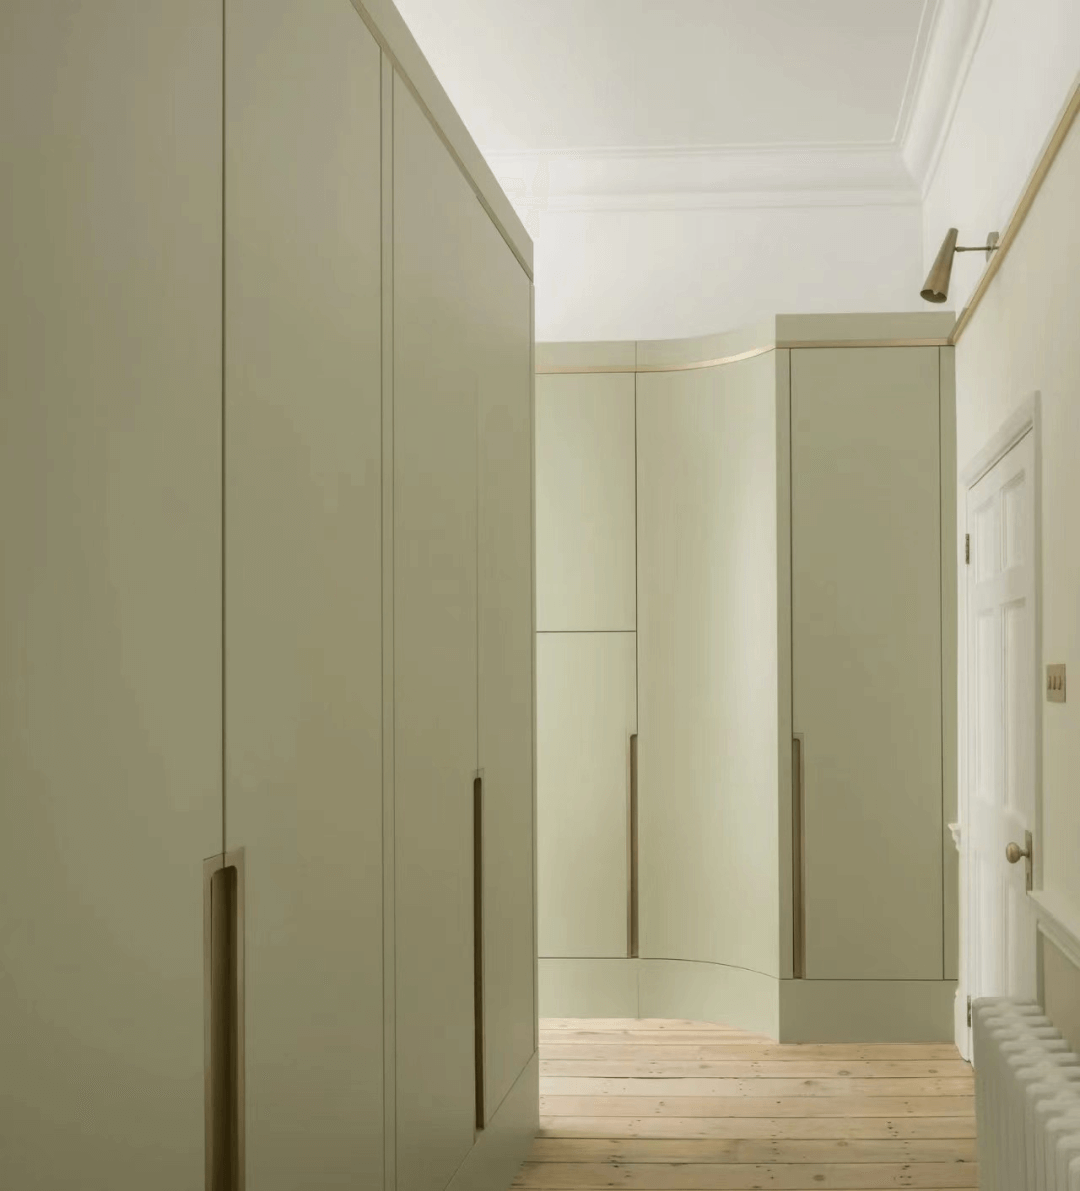 Cloakroom design